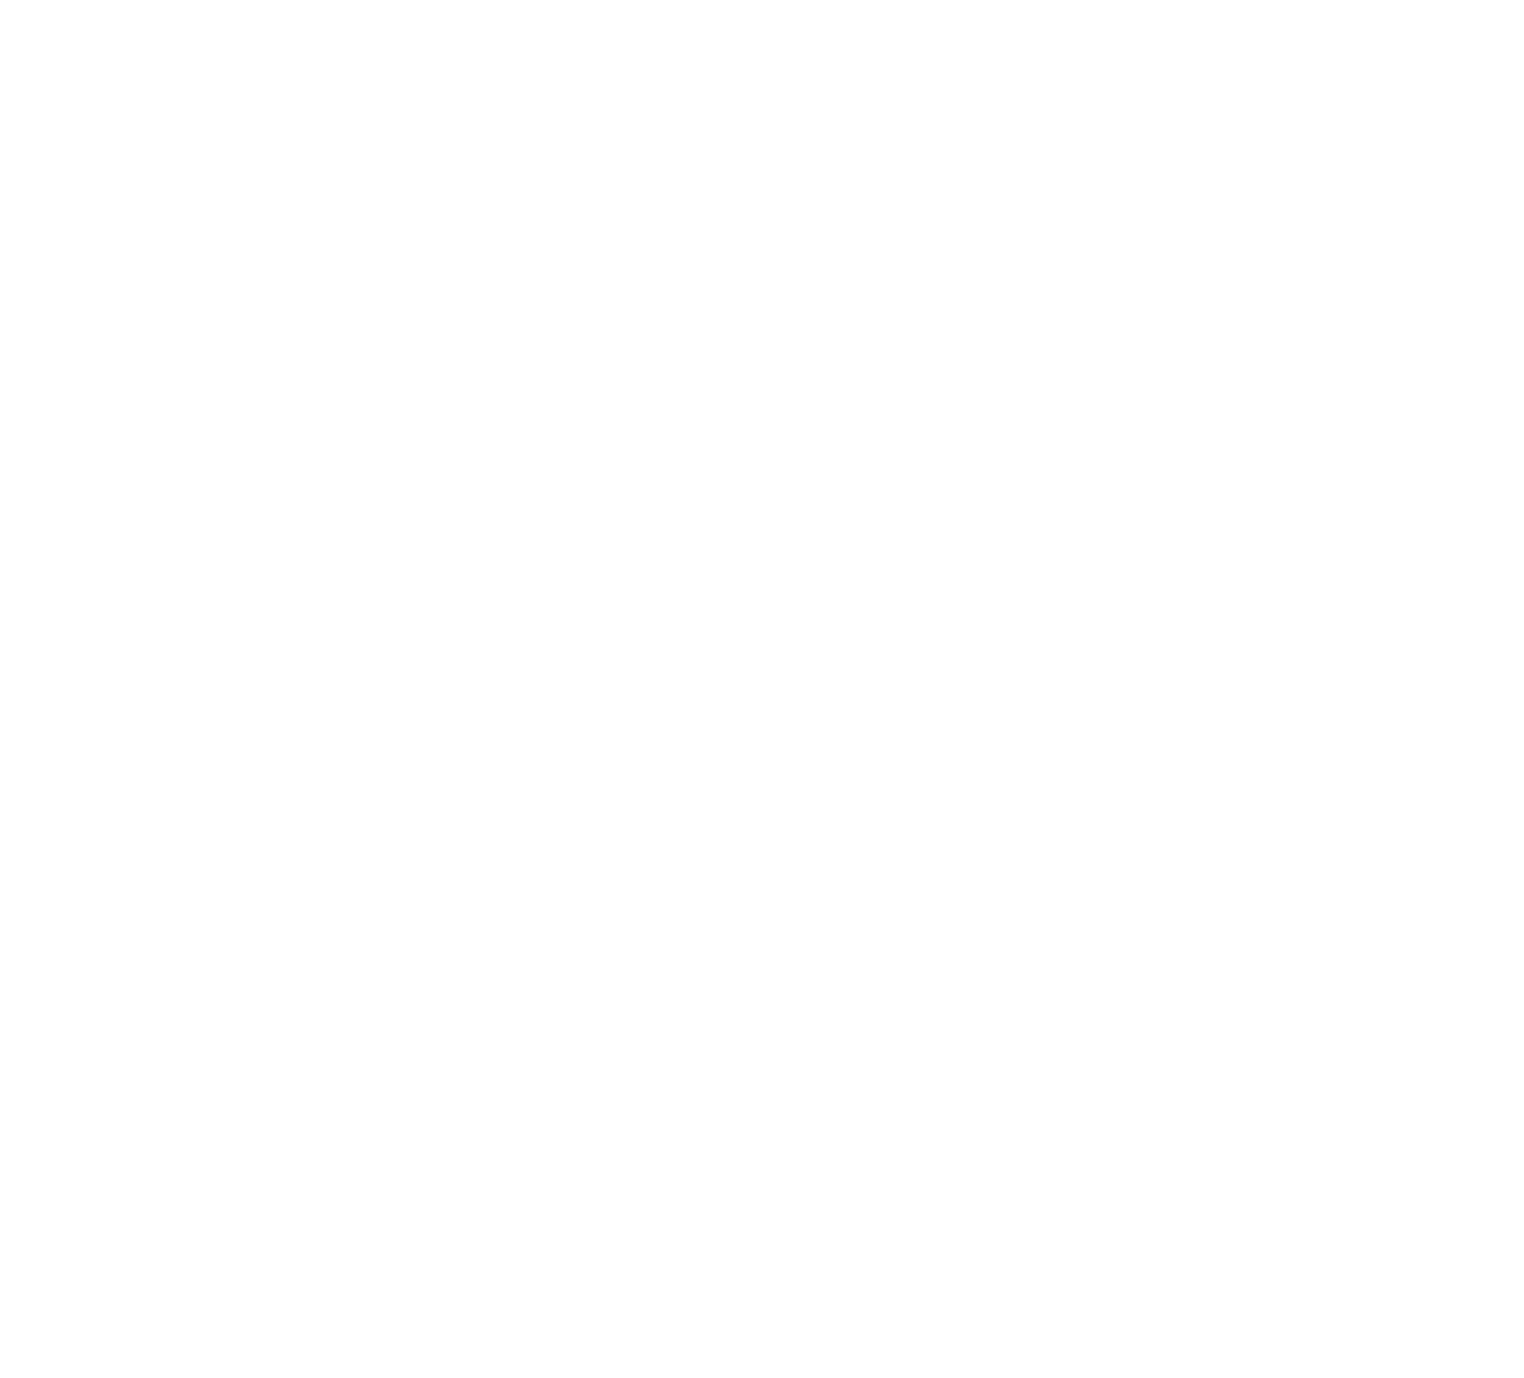 Aaron's logo for dark backgrounds (transparent PNG)